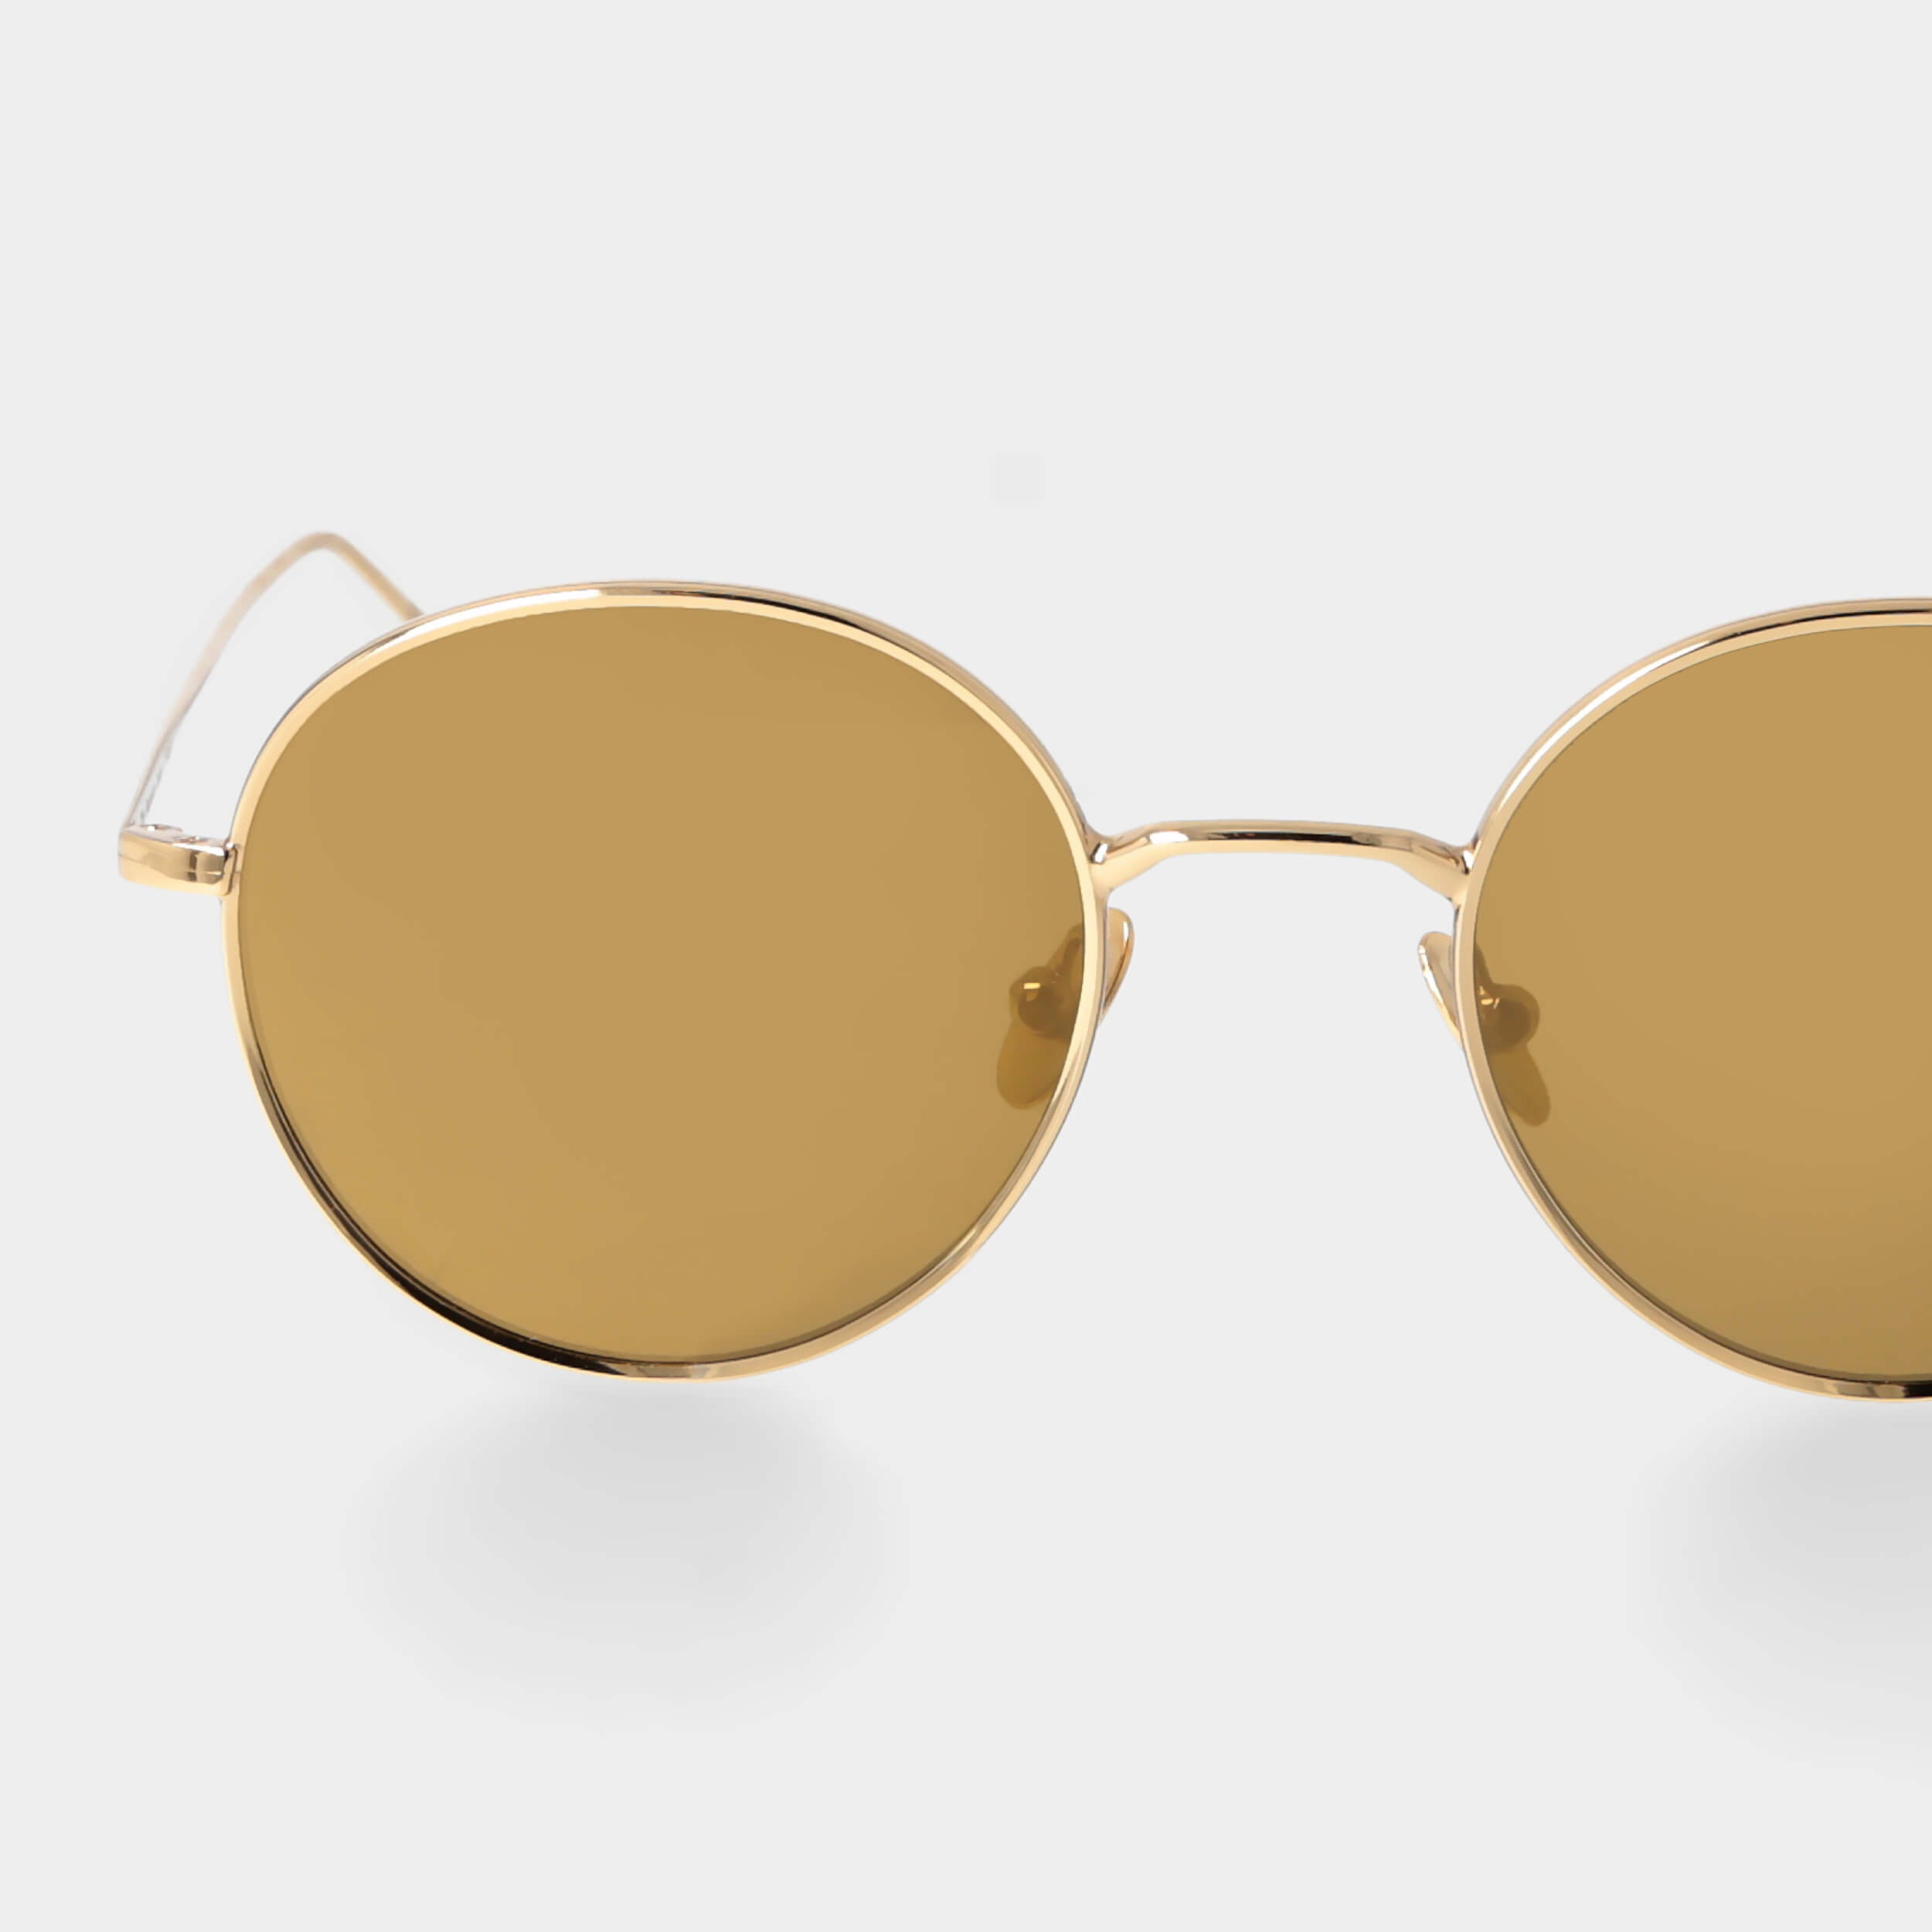 sunglasses-ulster-k-gold-tobacco-tbd-eyewear-lens